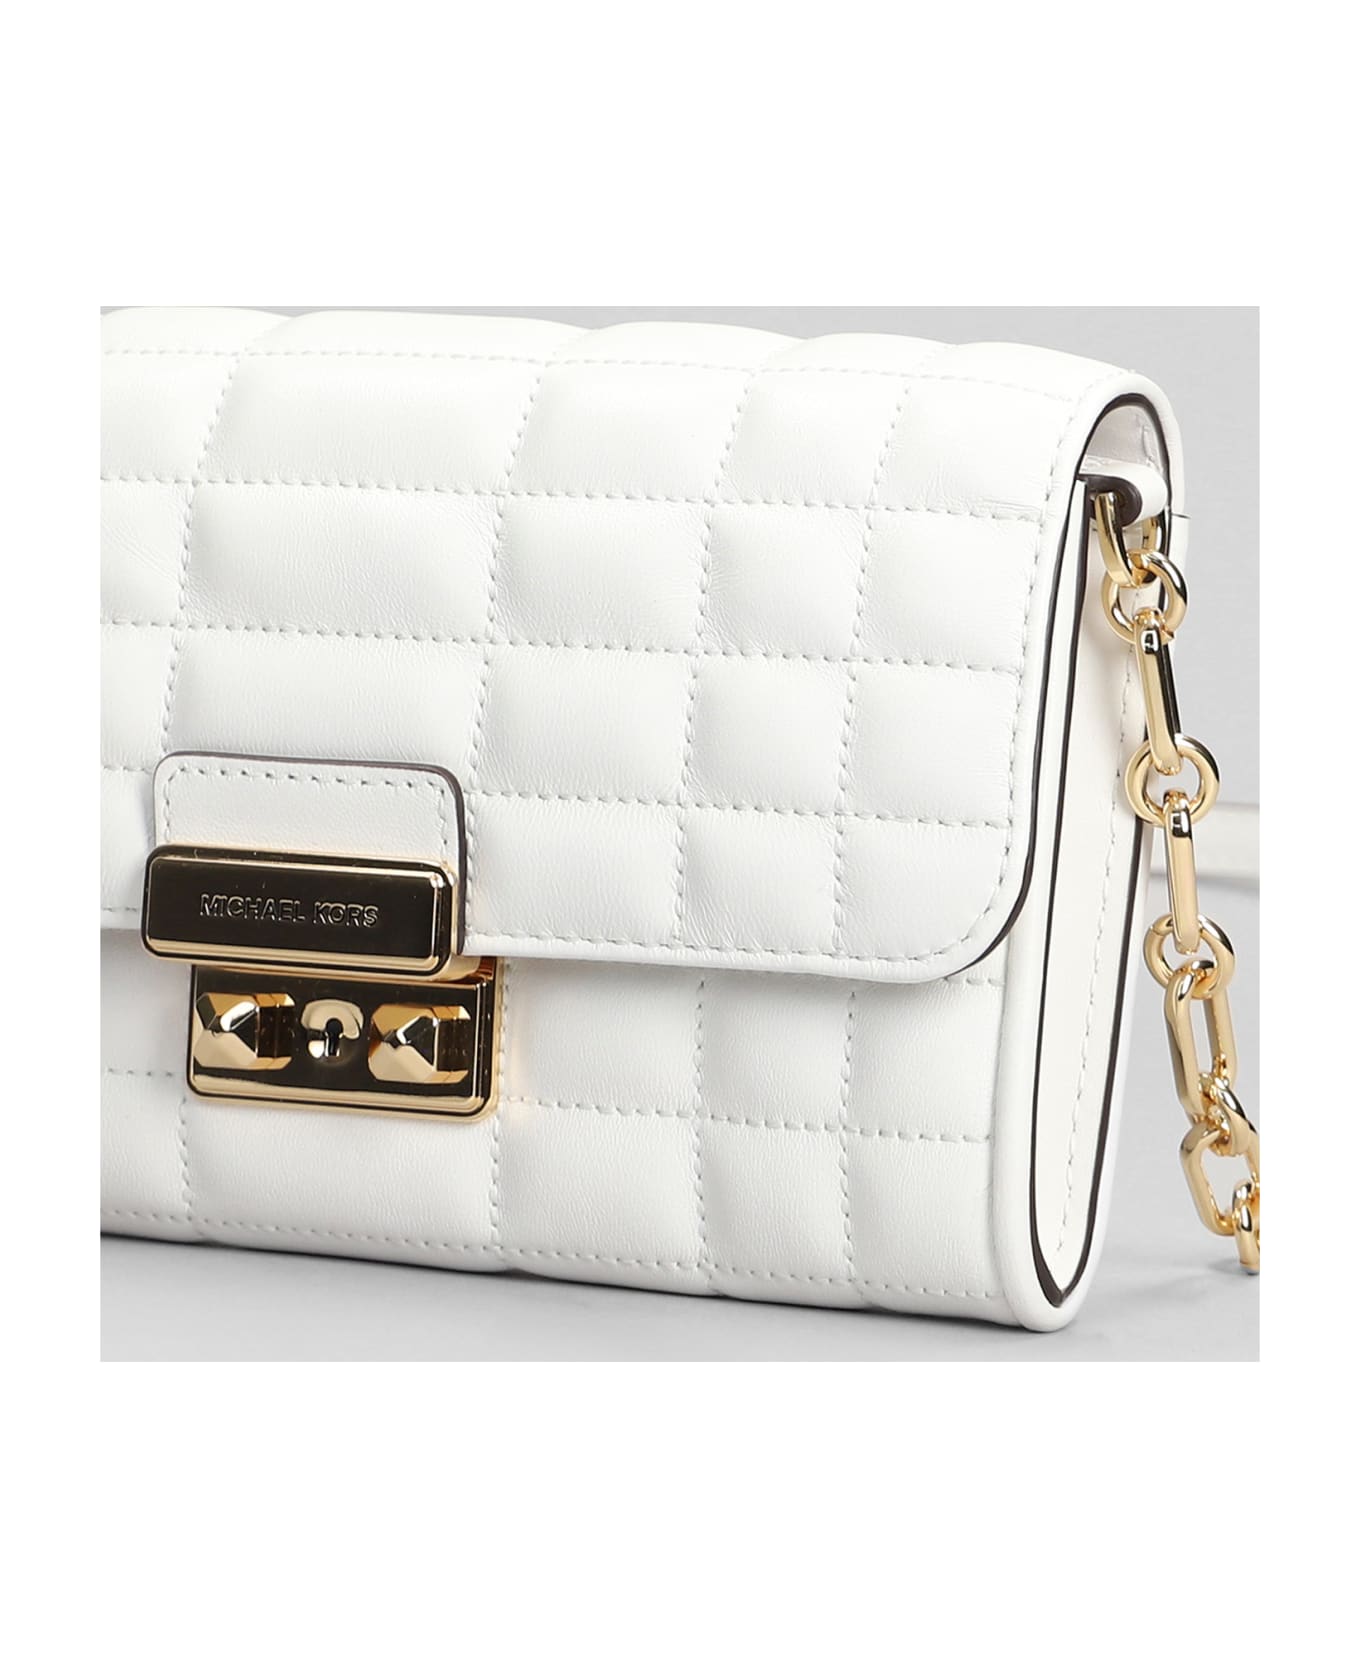 Michael Kors Tribeca Shoulder Bag In White Leather - white クラッチバッグ